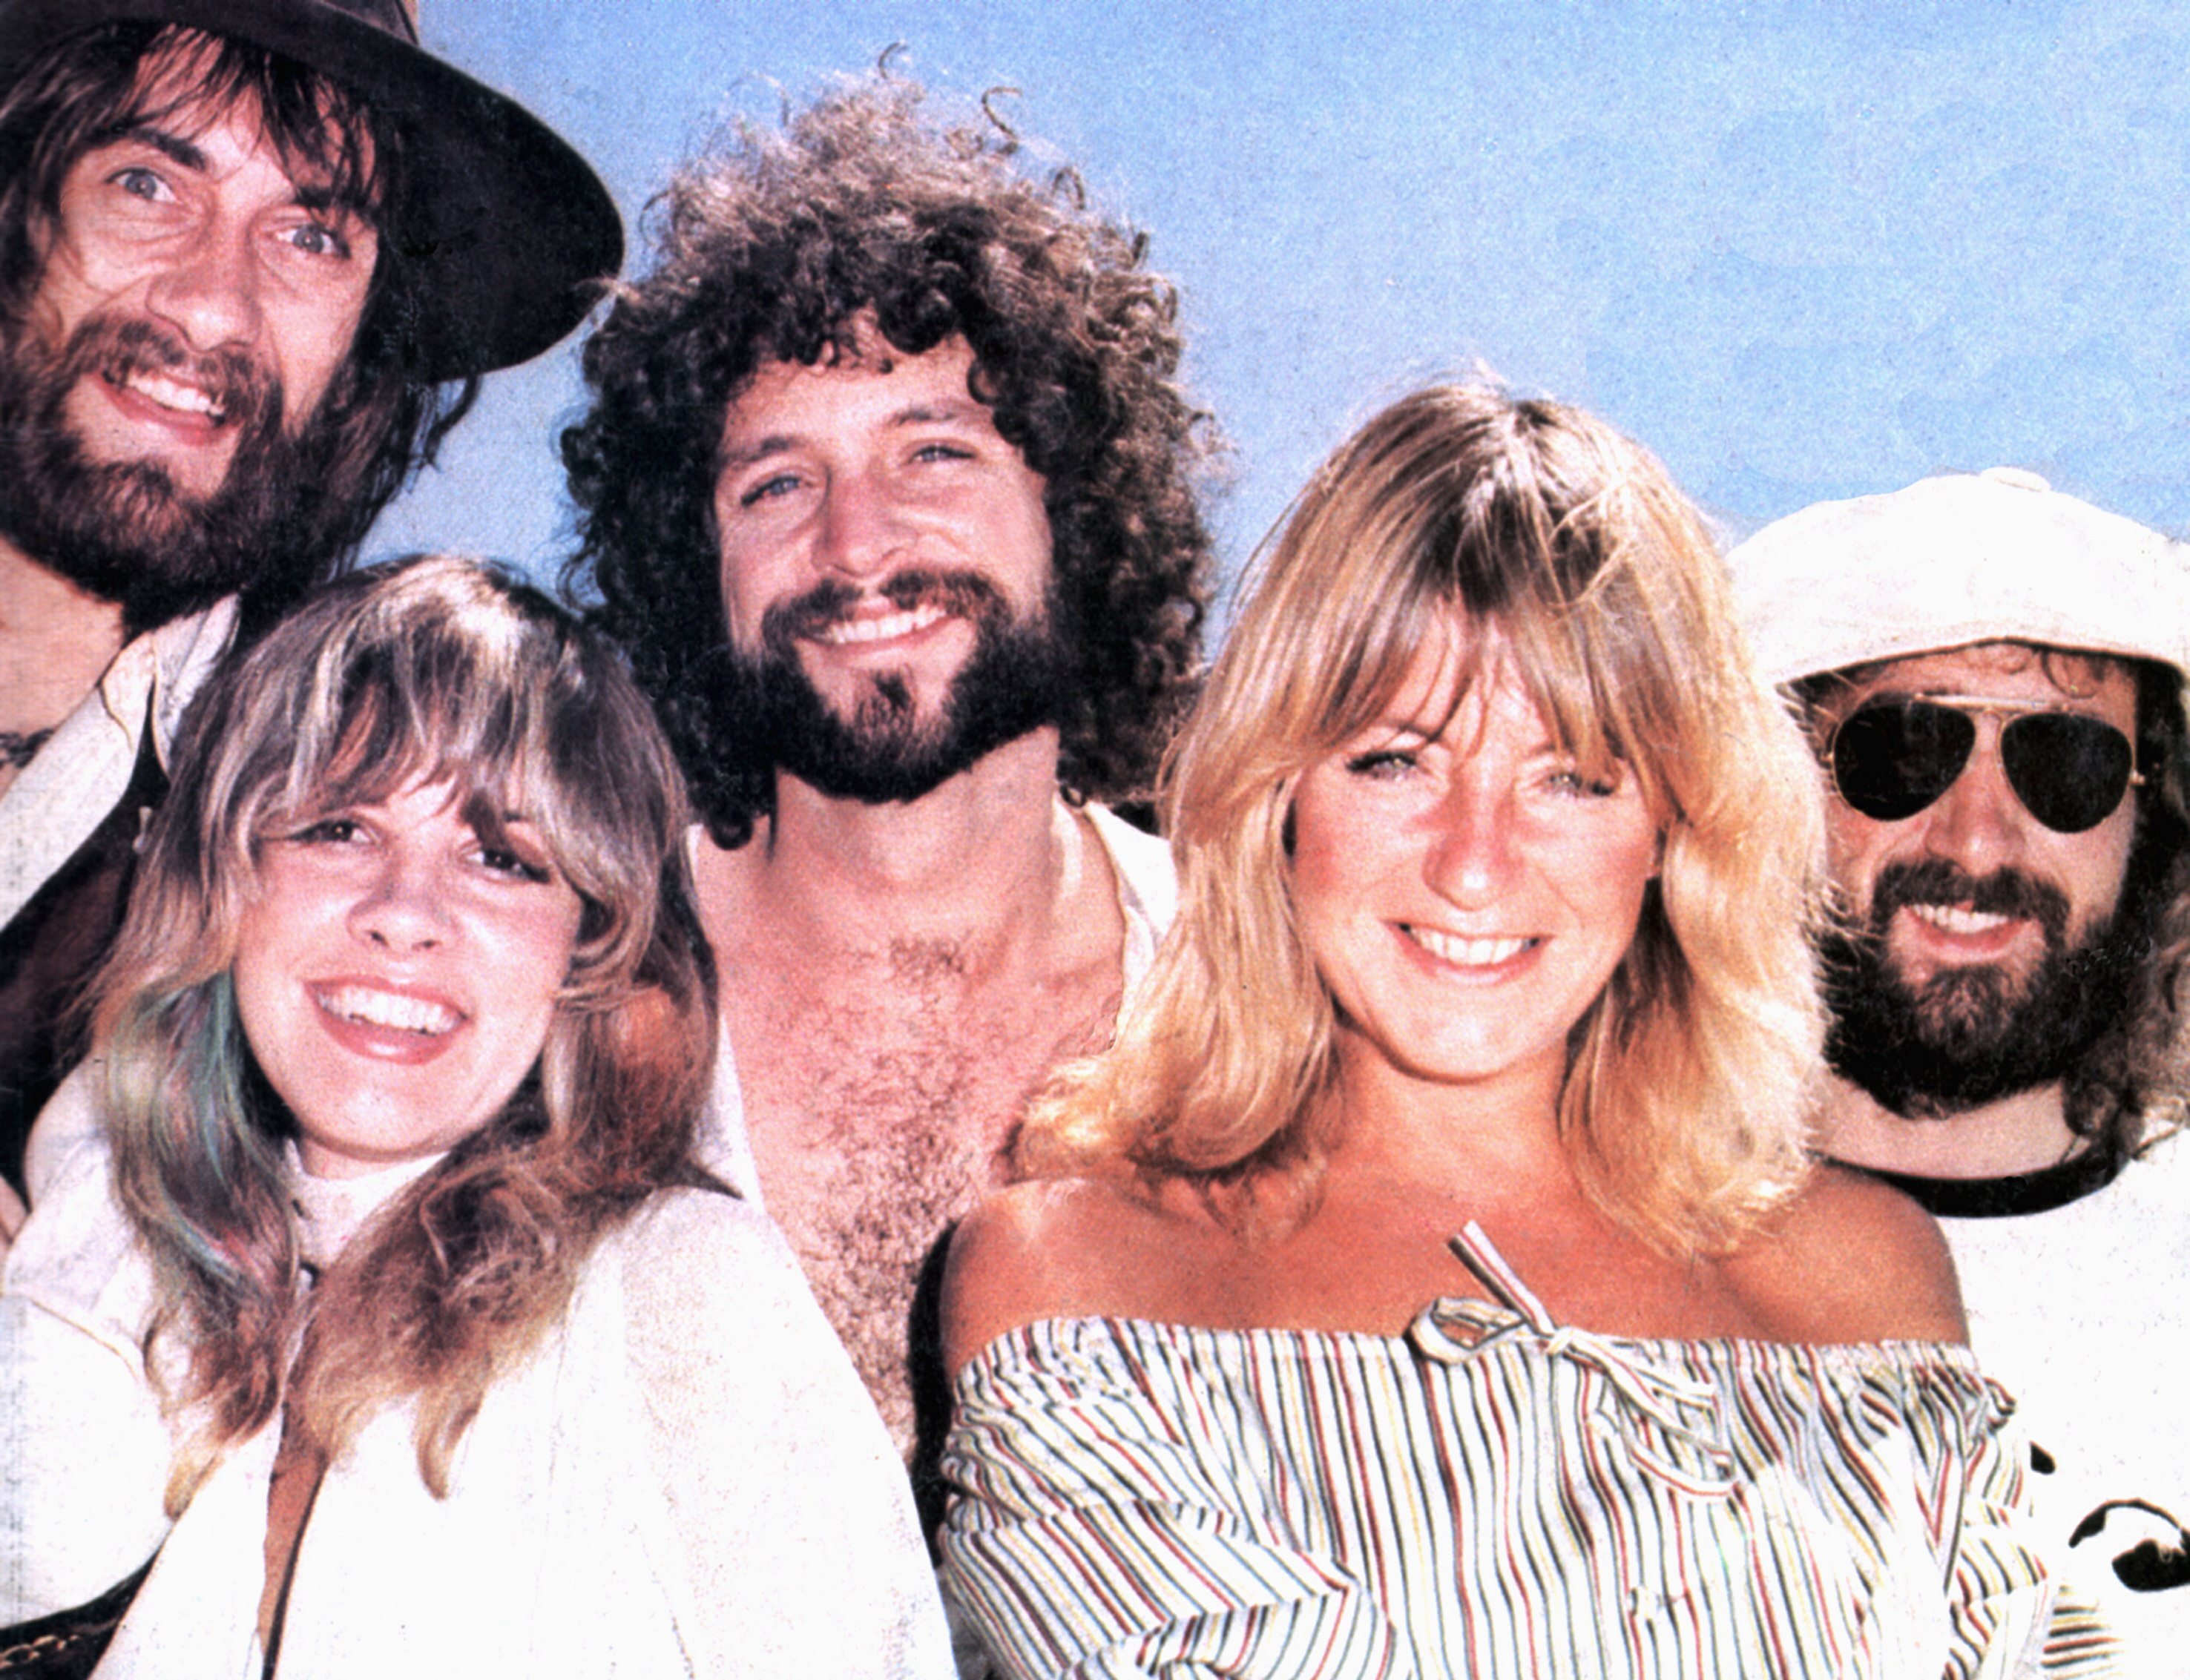 FLEETWOOD MAC featuring members Mick Fleetwood, Stevie Nicks, Lindsey Buckingham, Christine McVie, and John McVie